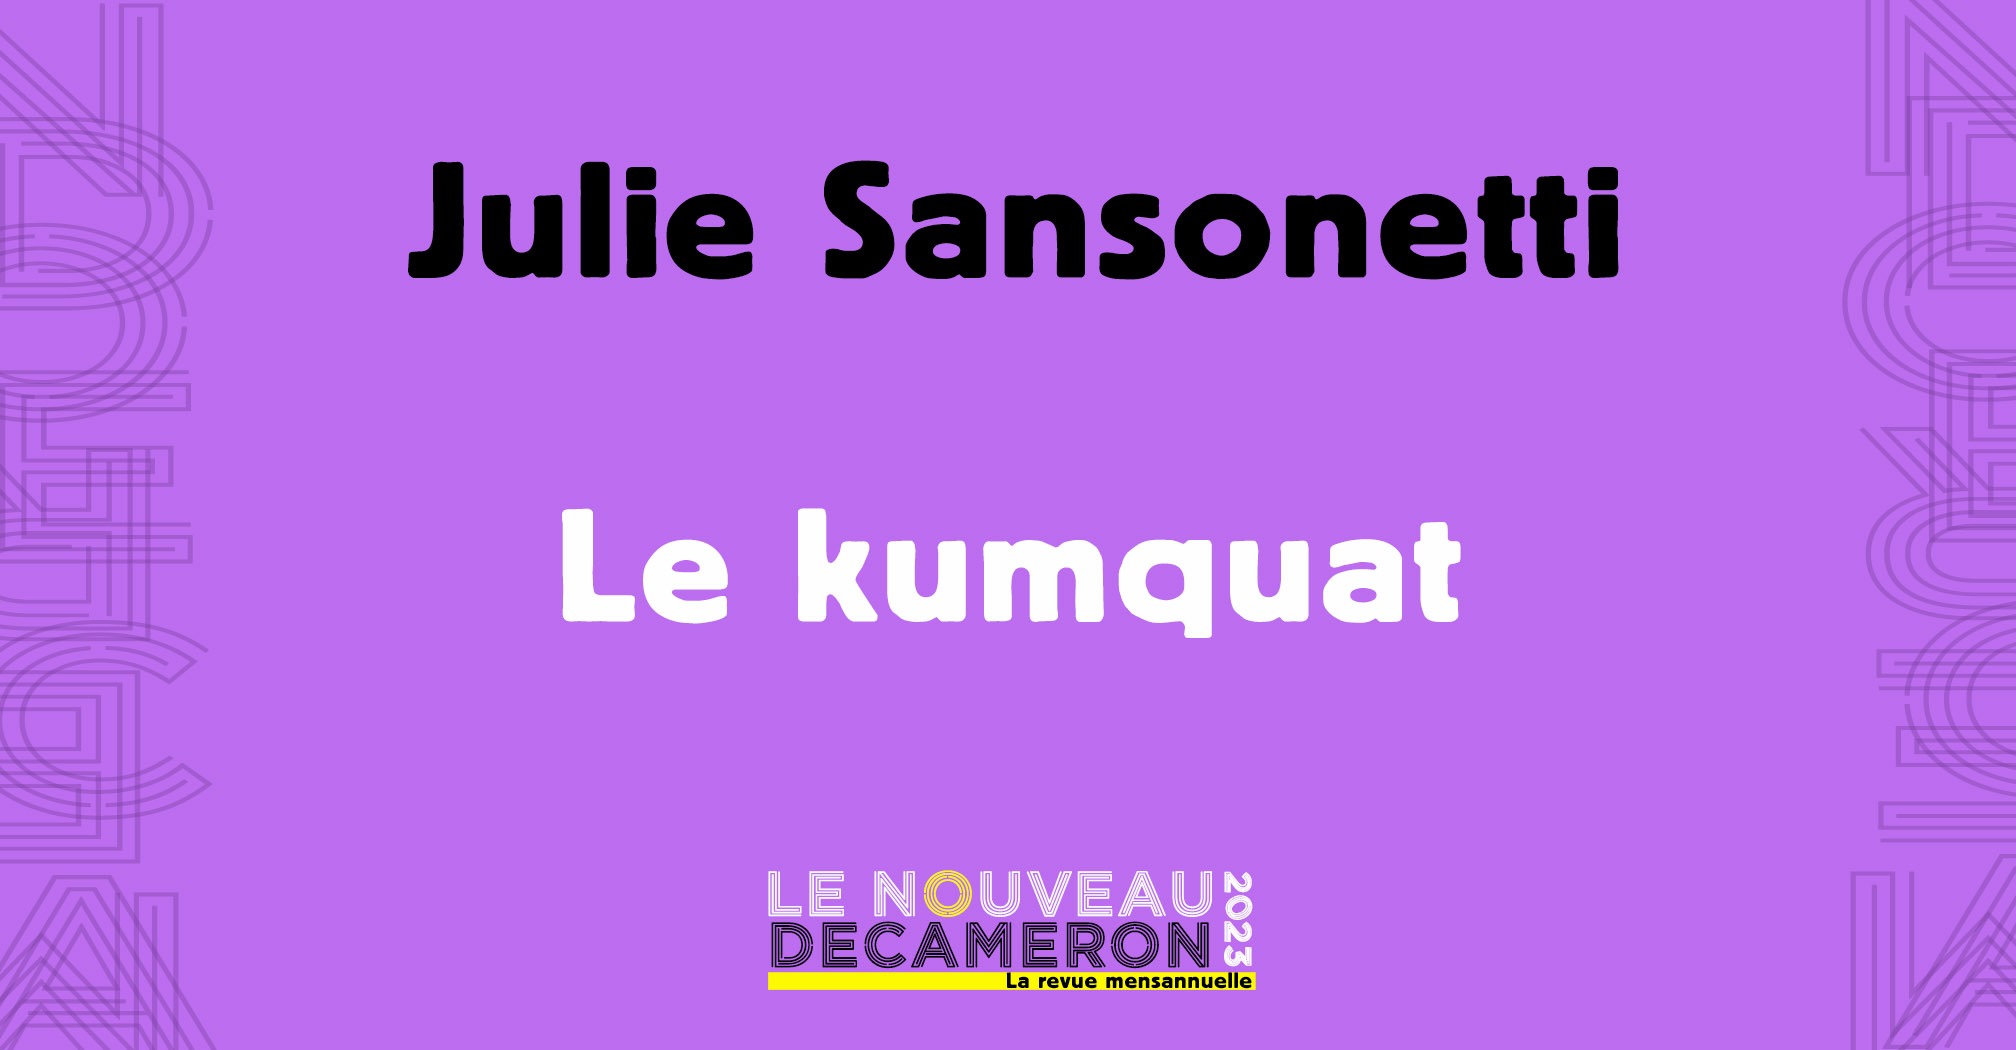 Julie Sansonetti - Le kumquat